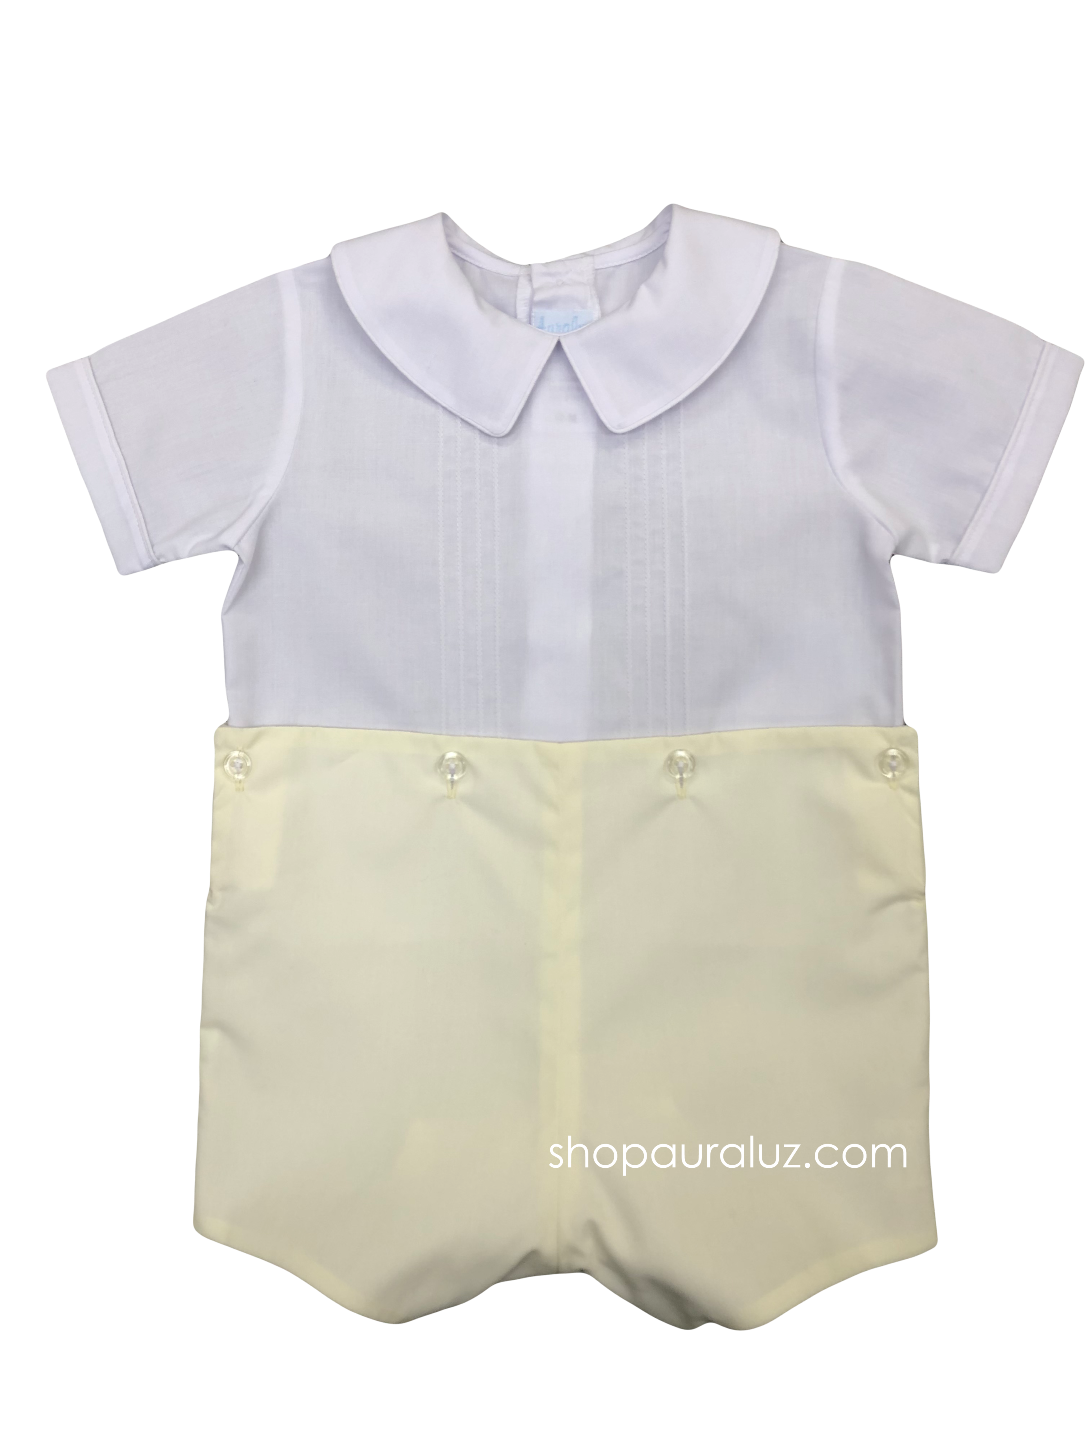 Auraluz Boy Button-On...Yellow/white with boy collar and tucks